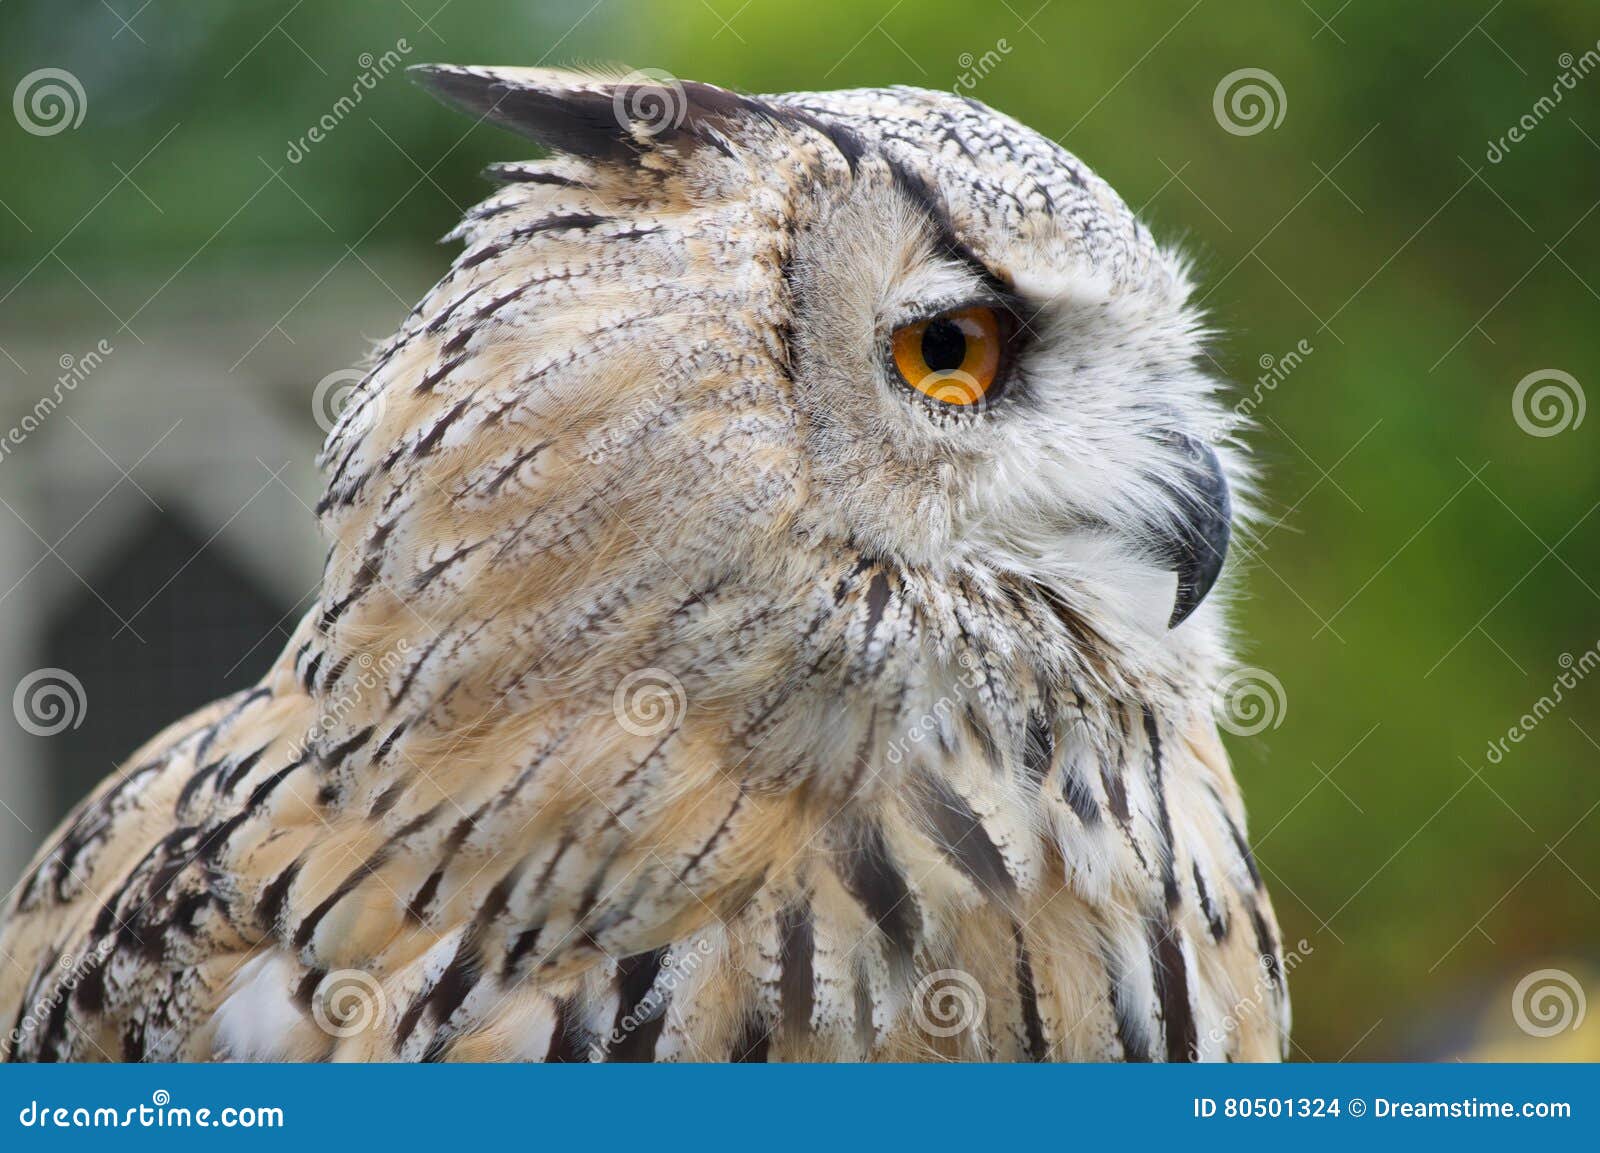 Snowy Owl stock photo. Image of outside, angles, beak - 80501324